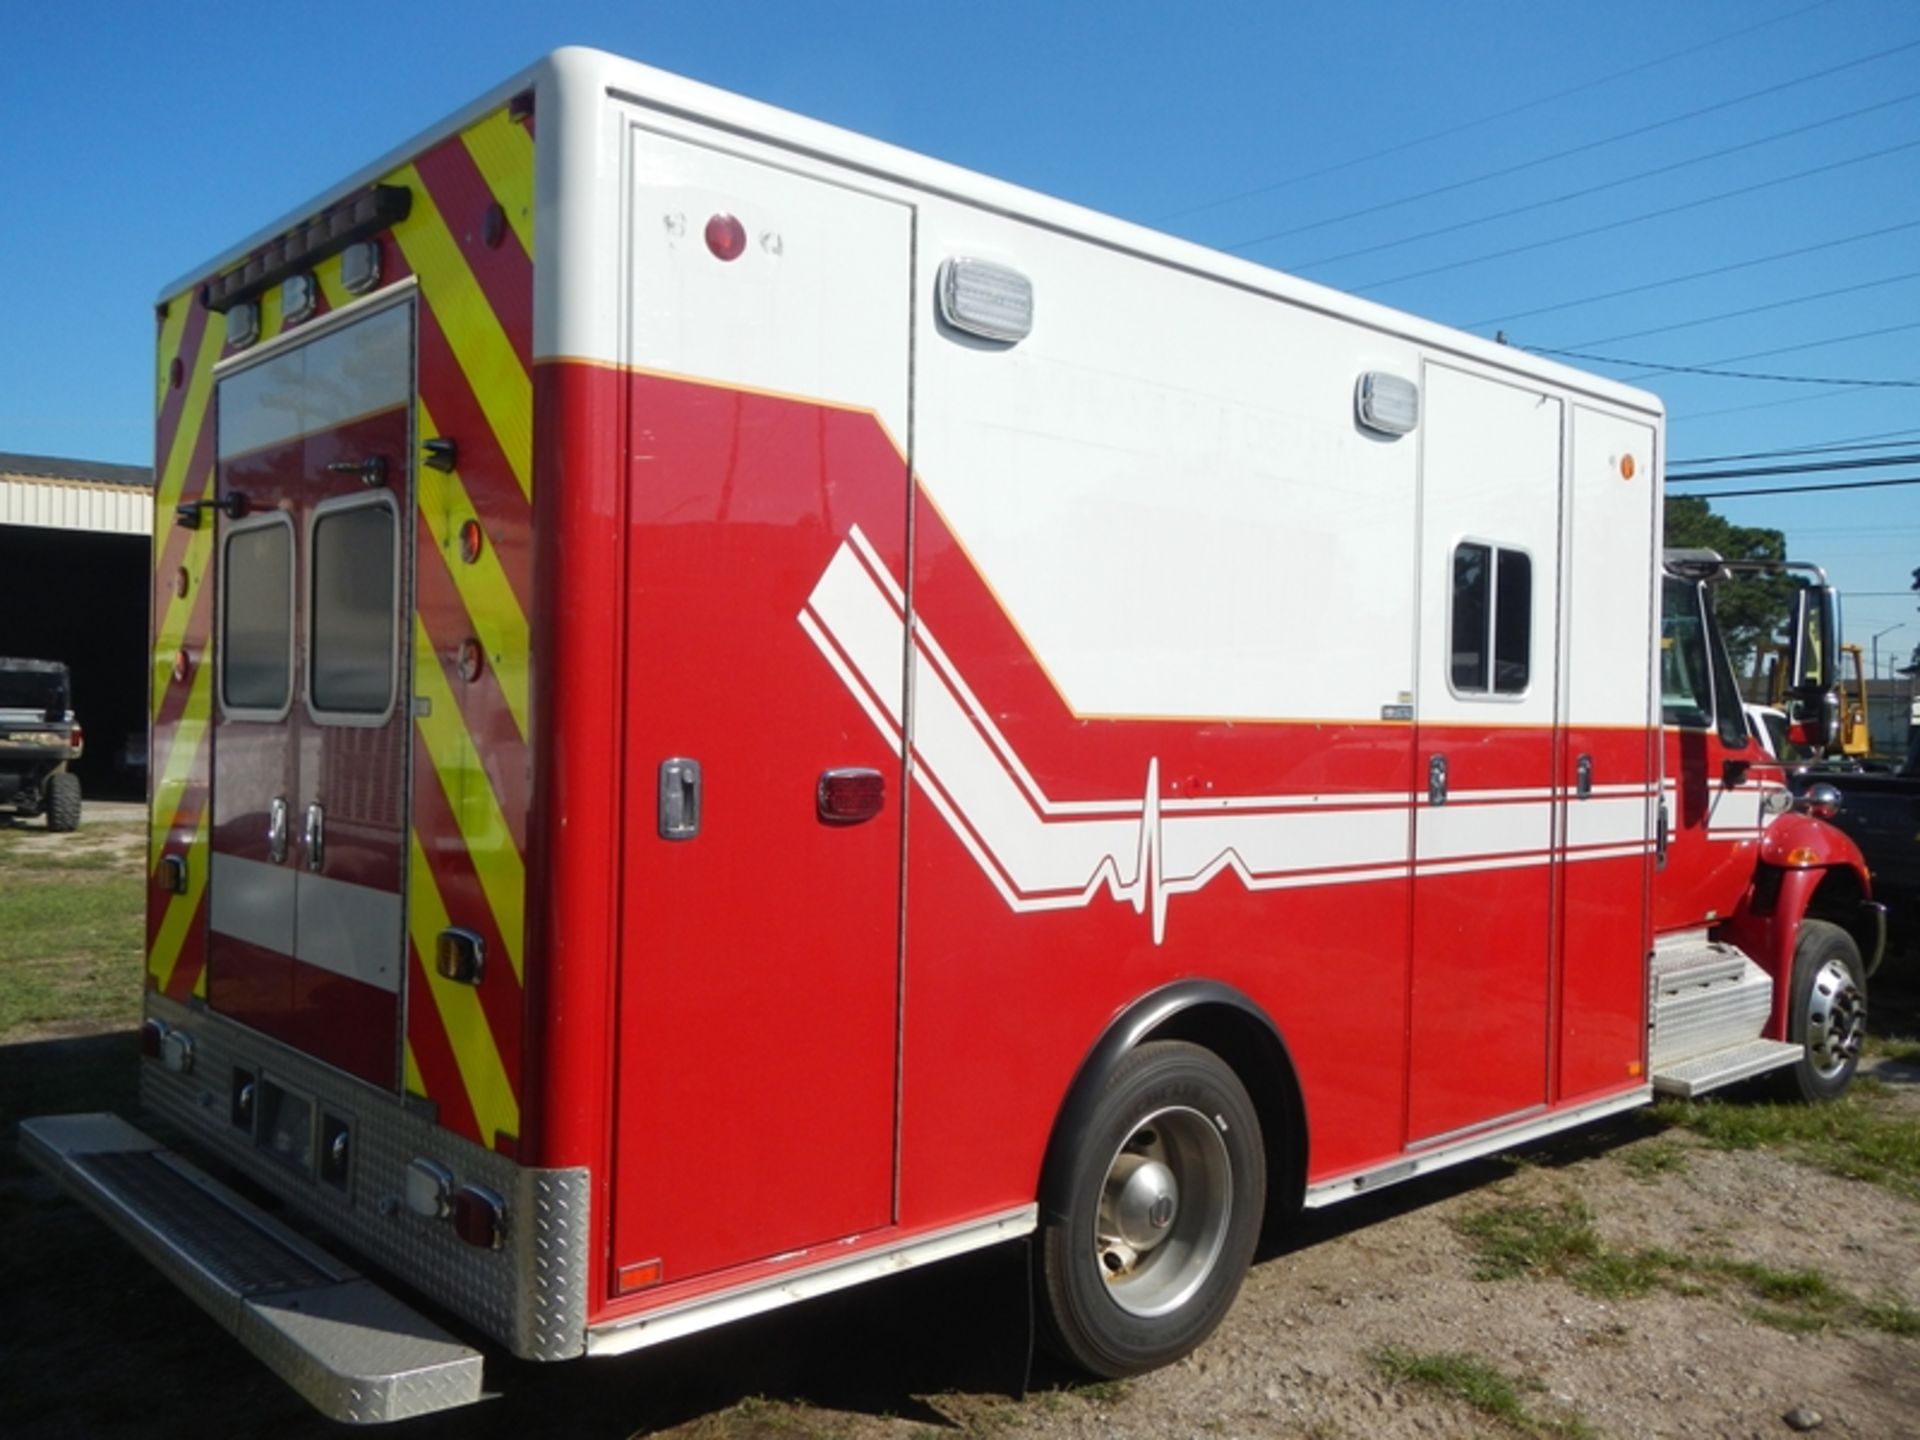 2012 INTERNATIONAL 4000 Medium Duty ambulance 159,900 miles - 1HTMNAAL8CH138069 - Image 3 of 6